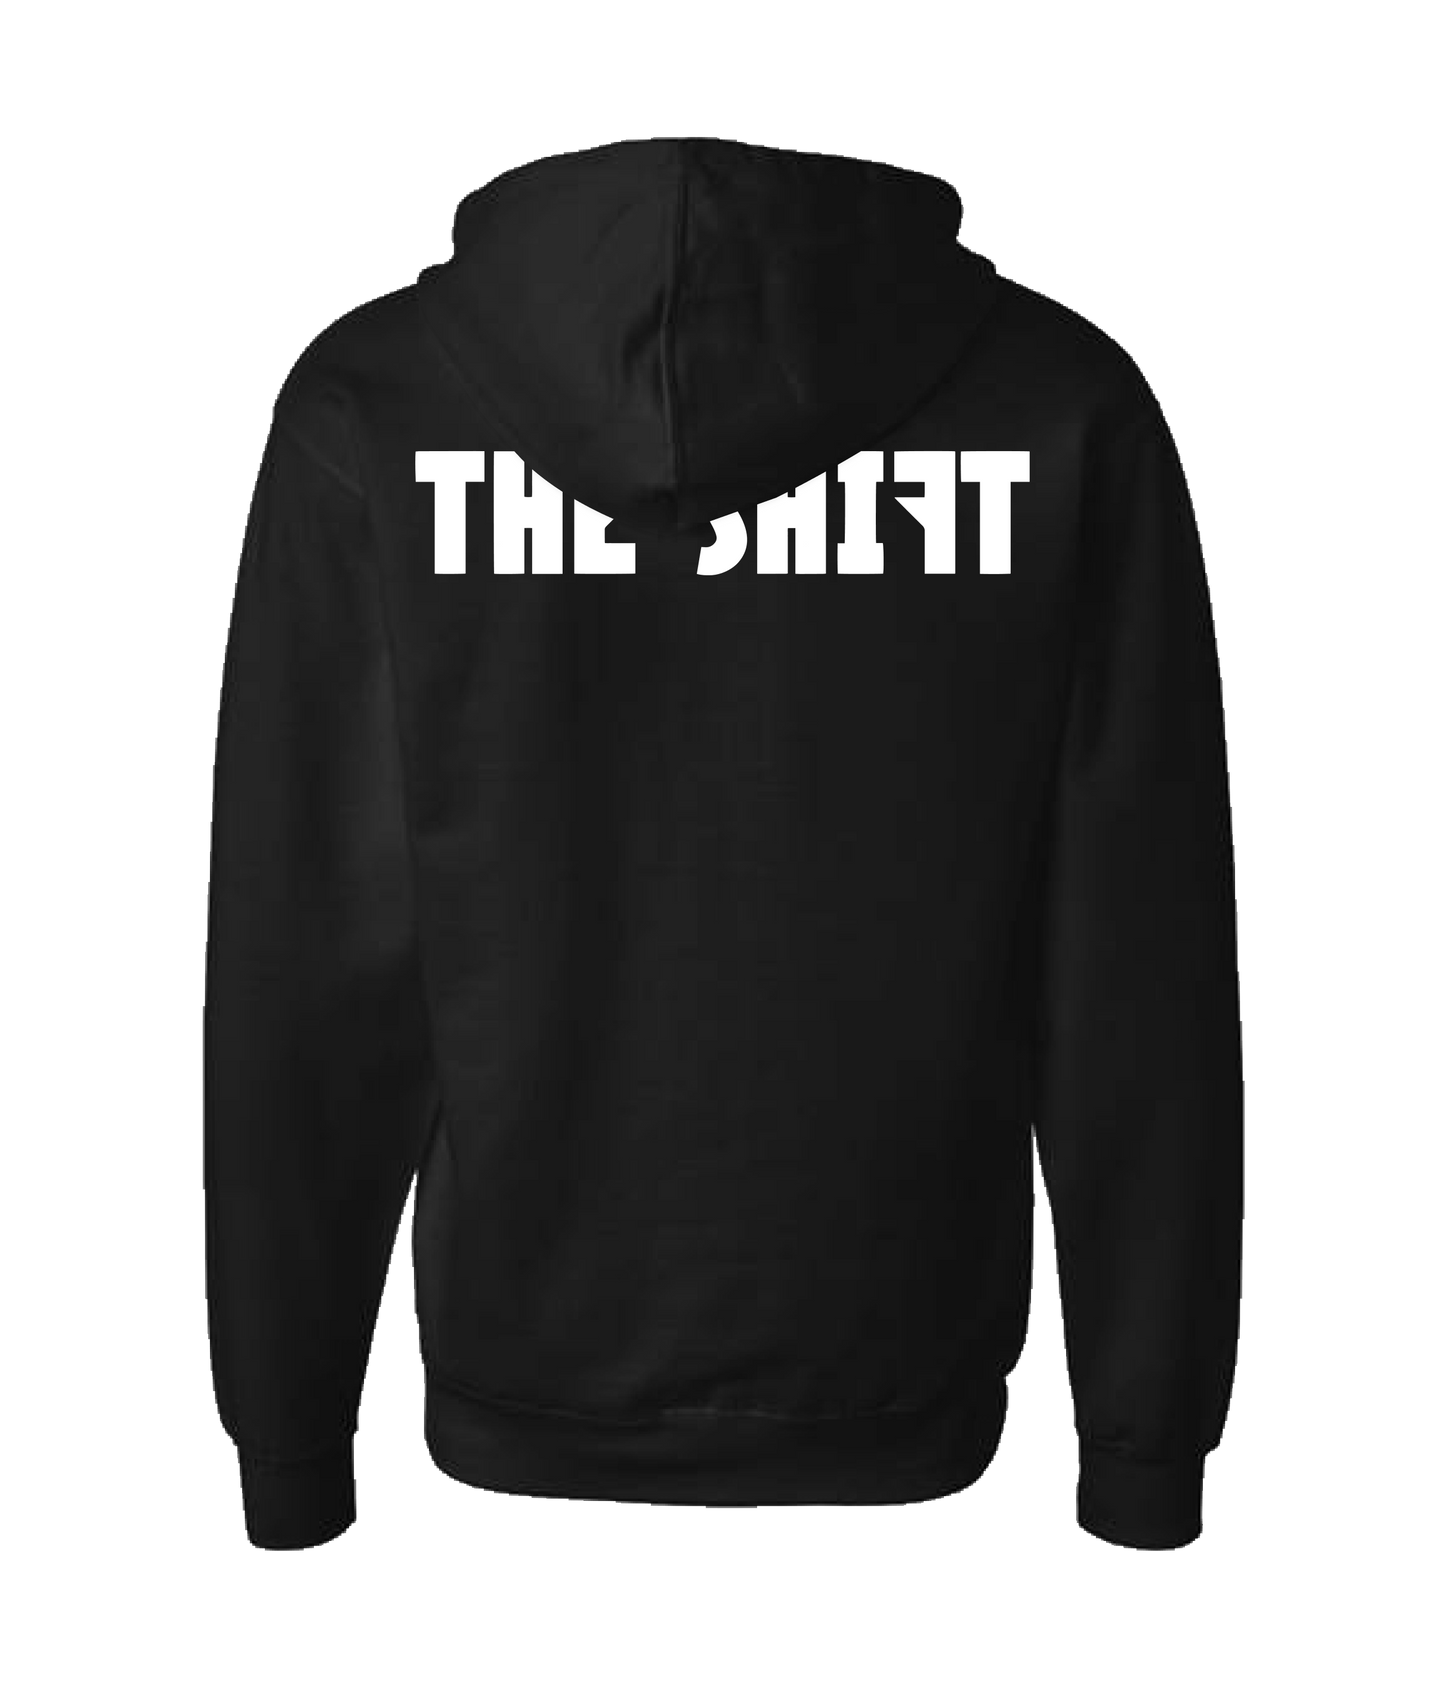 TheShift - Start The Shift - Black Zip Up Hoodie